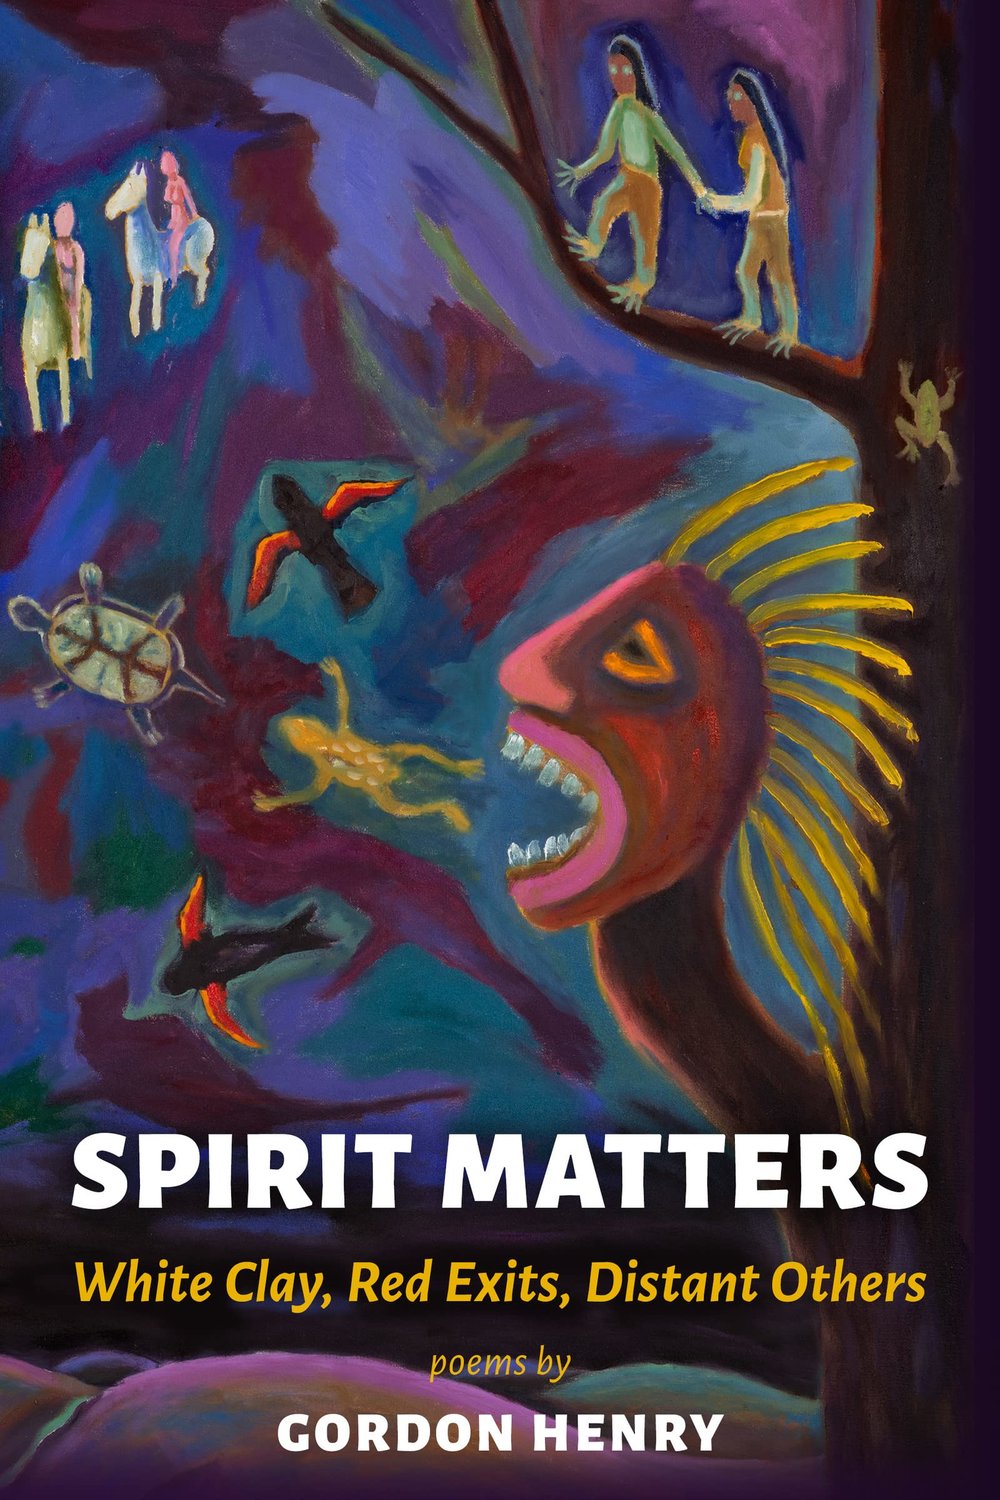 “Spirit Matters” by Gordon Henry